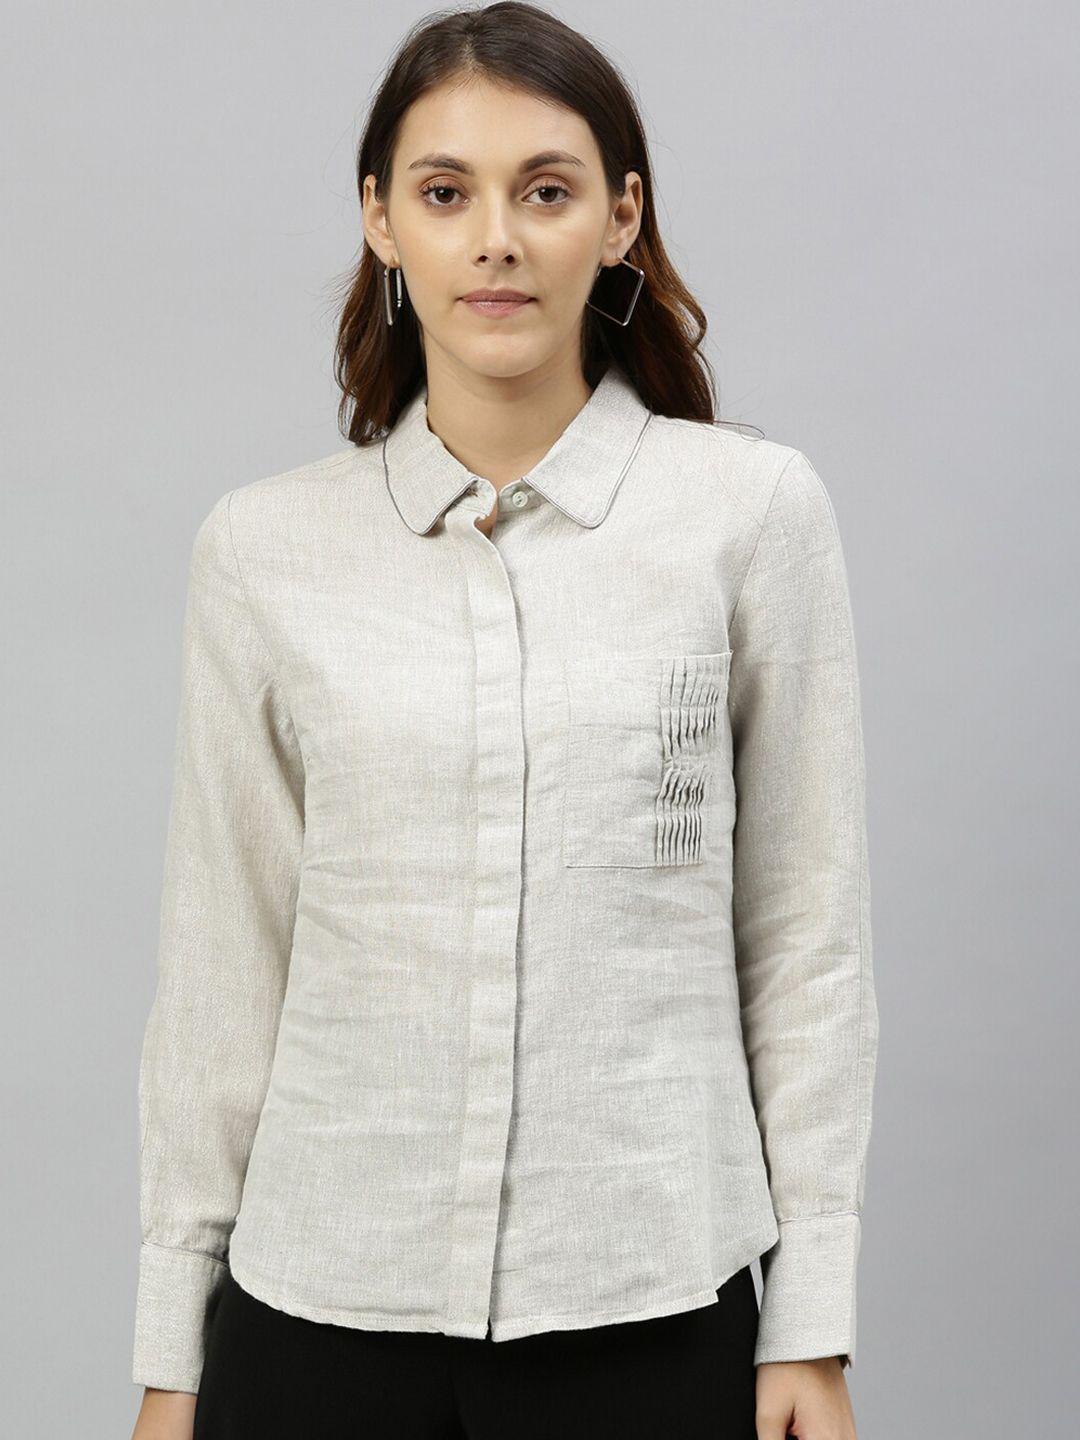 rareism off white linen shirt style top